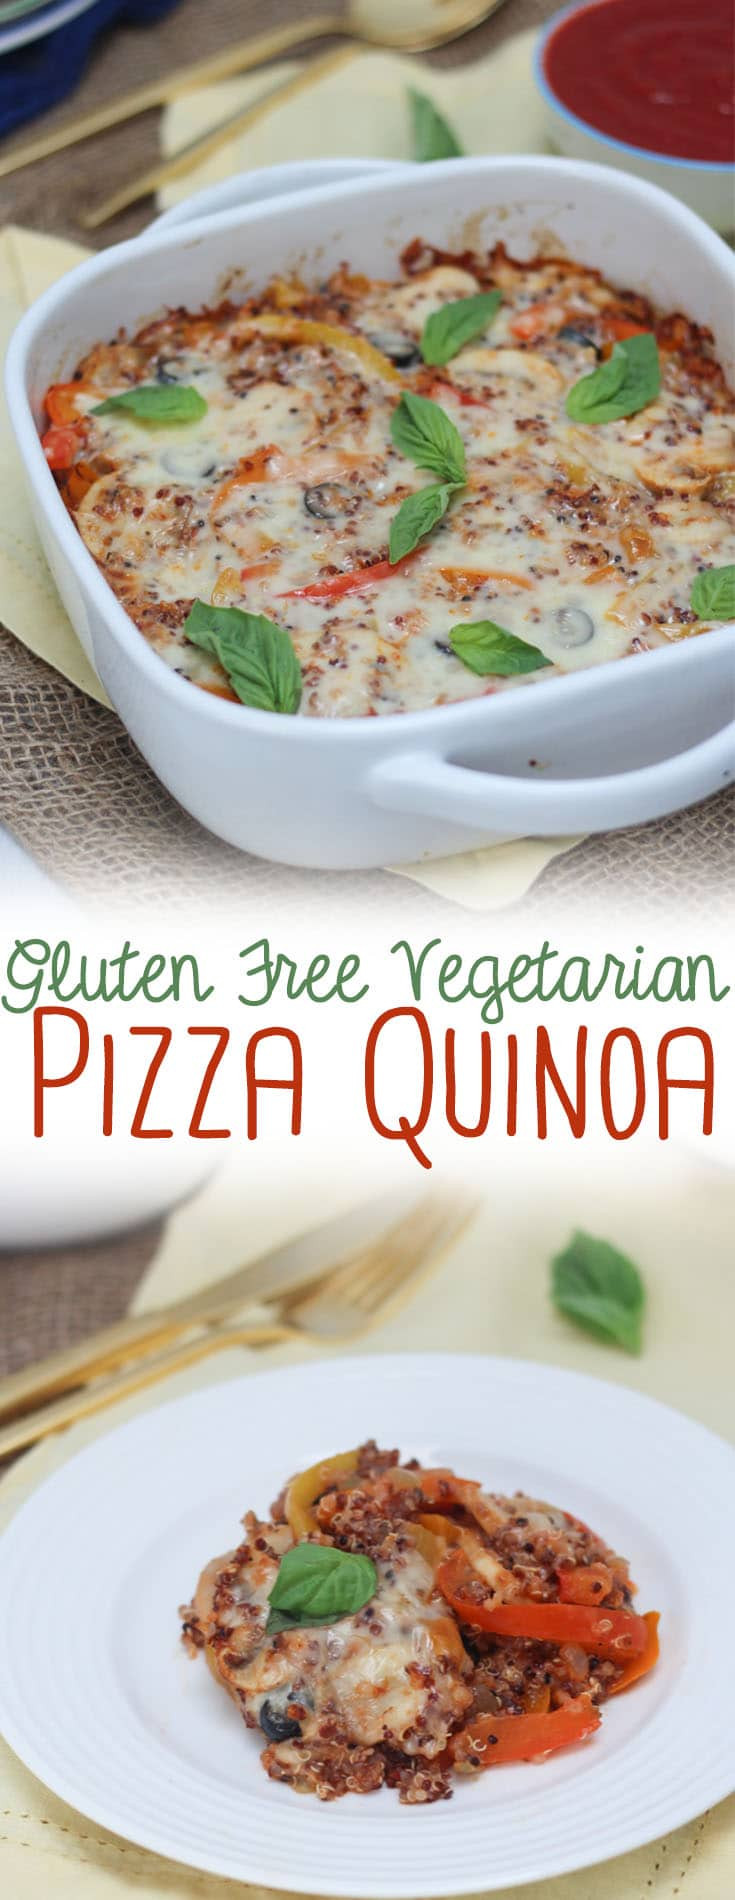 Vegetarian Gluten Free Casserole Recipes
 Gluten Free Ve arian Pizza Quinoa Casserole